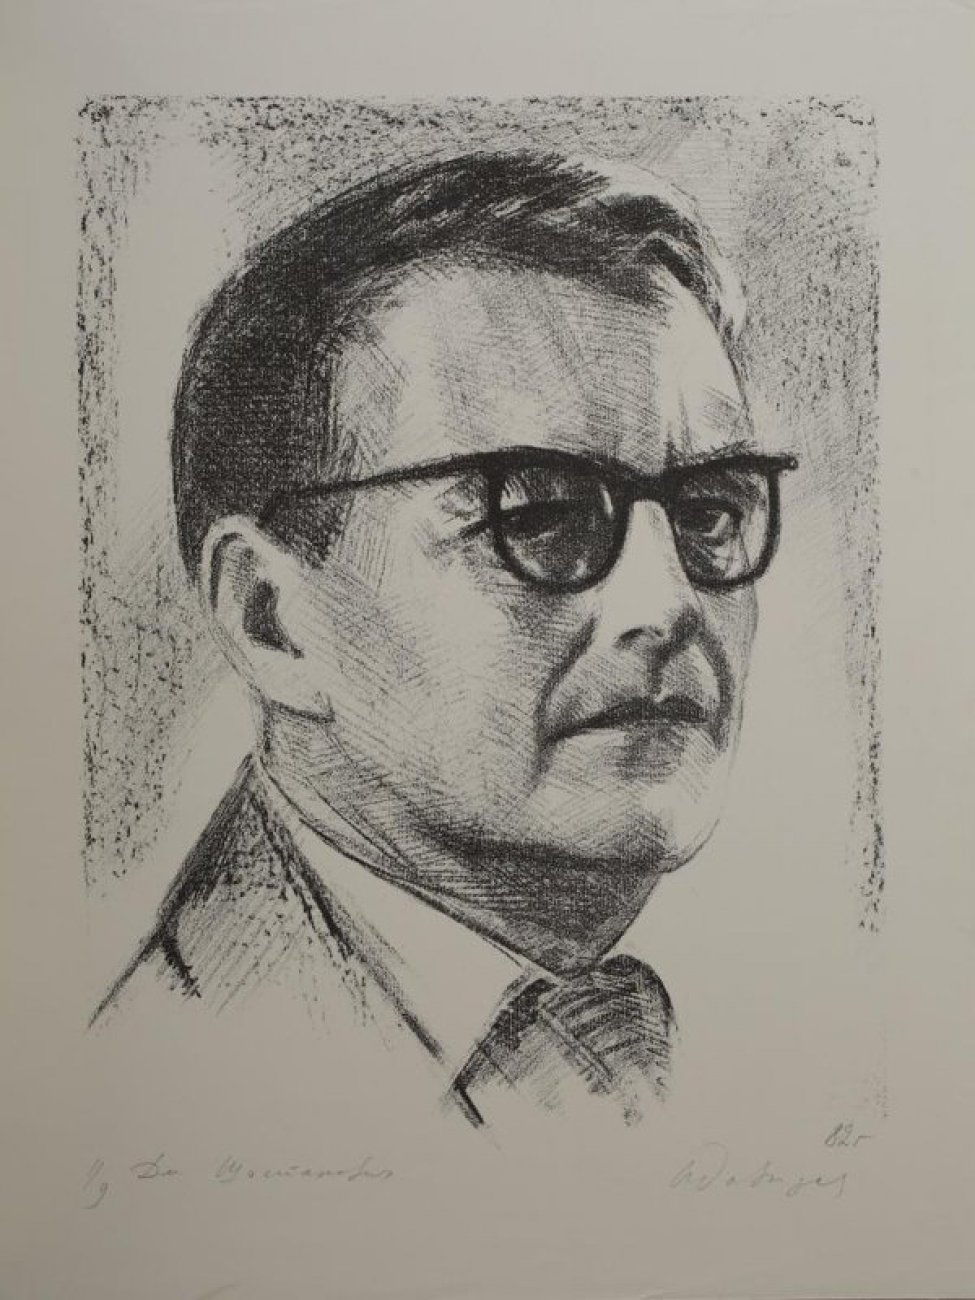 Кустодиев портрет Шостаковича